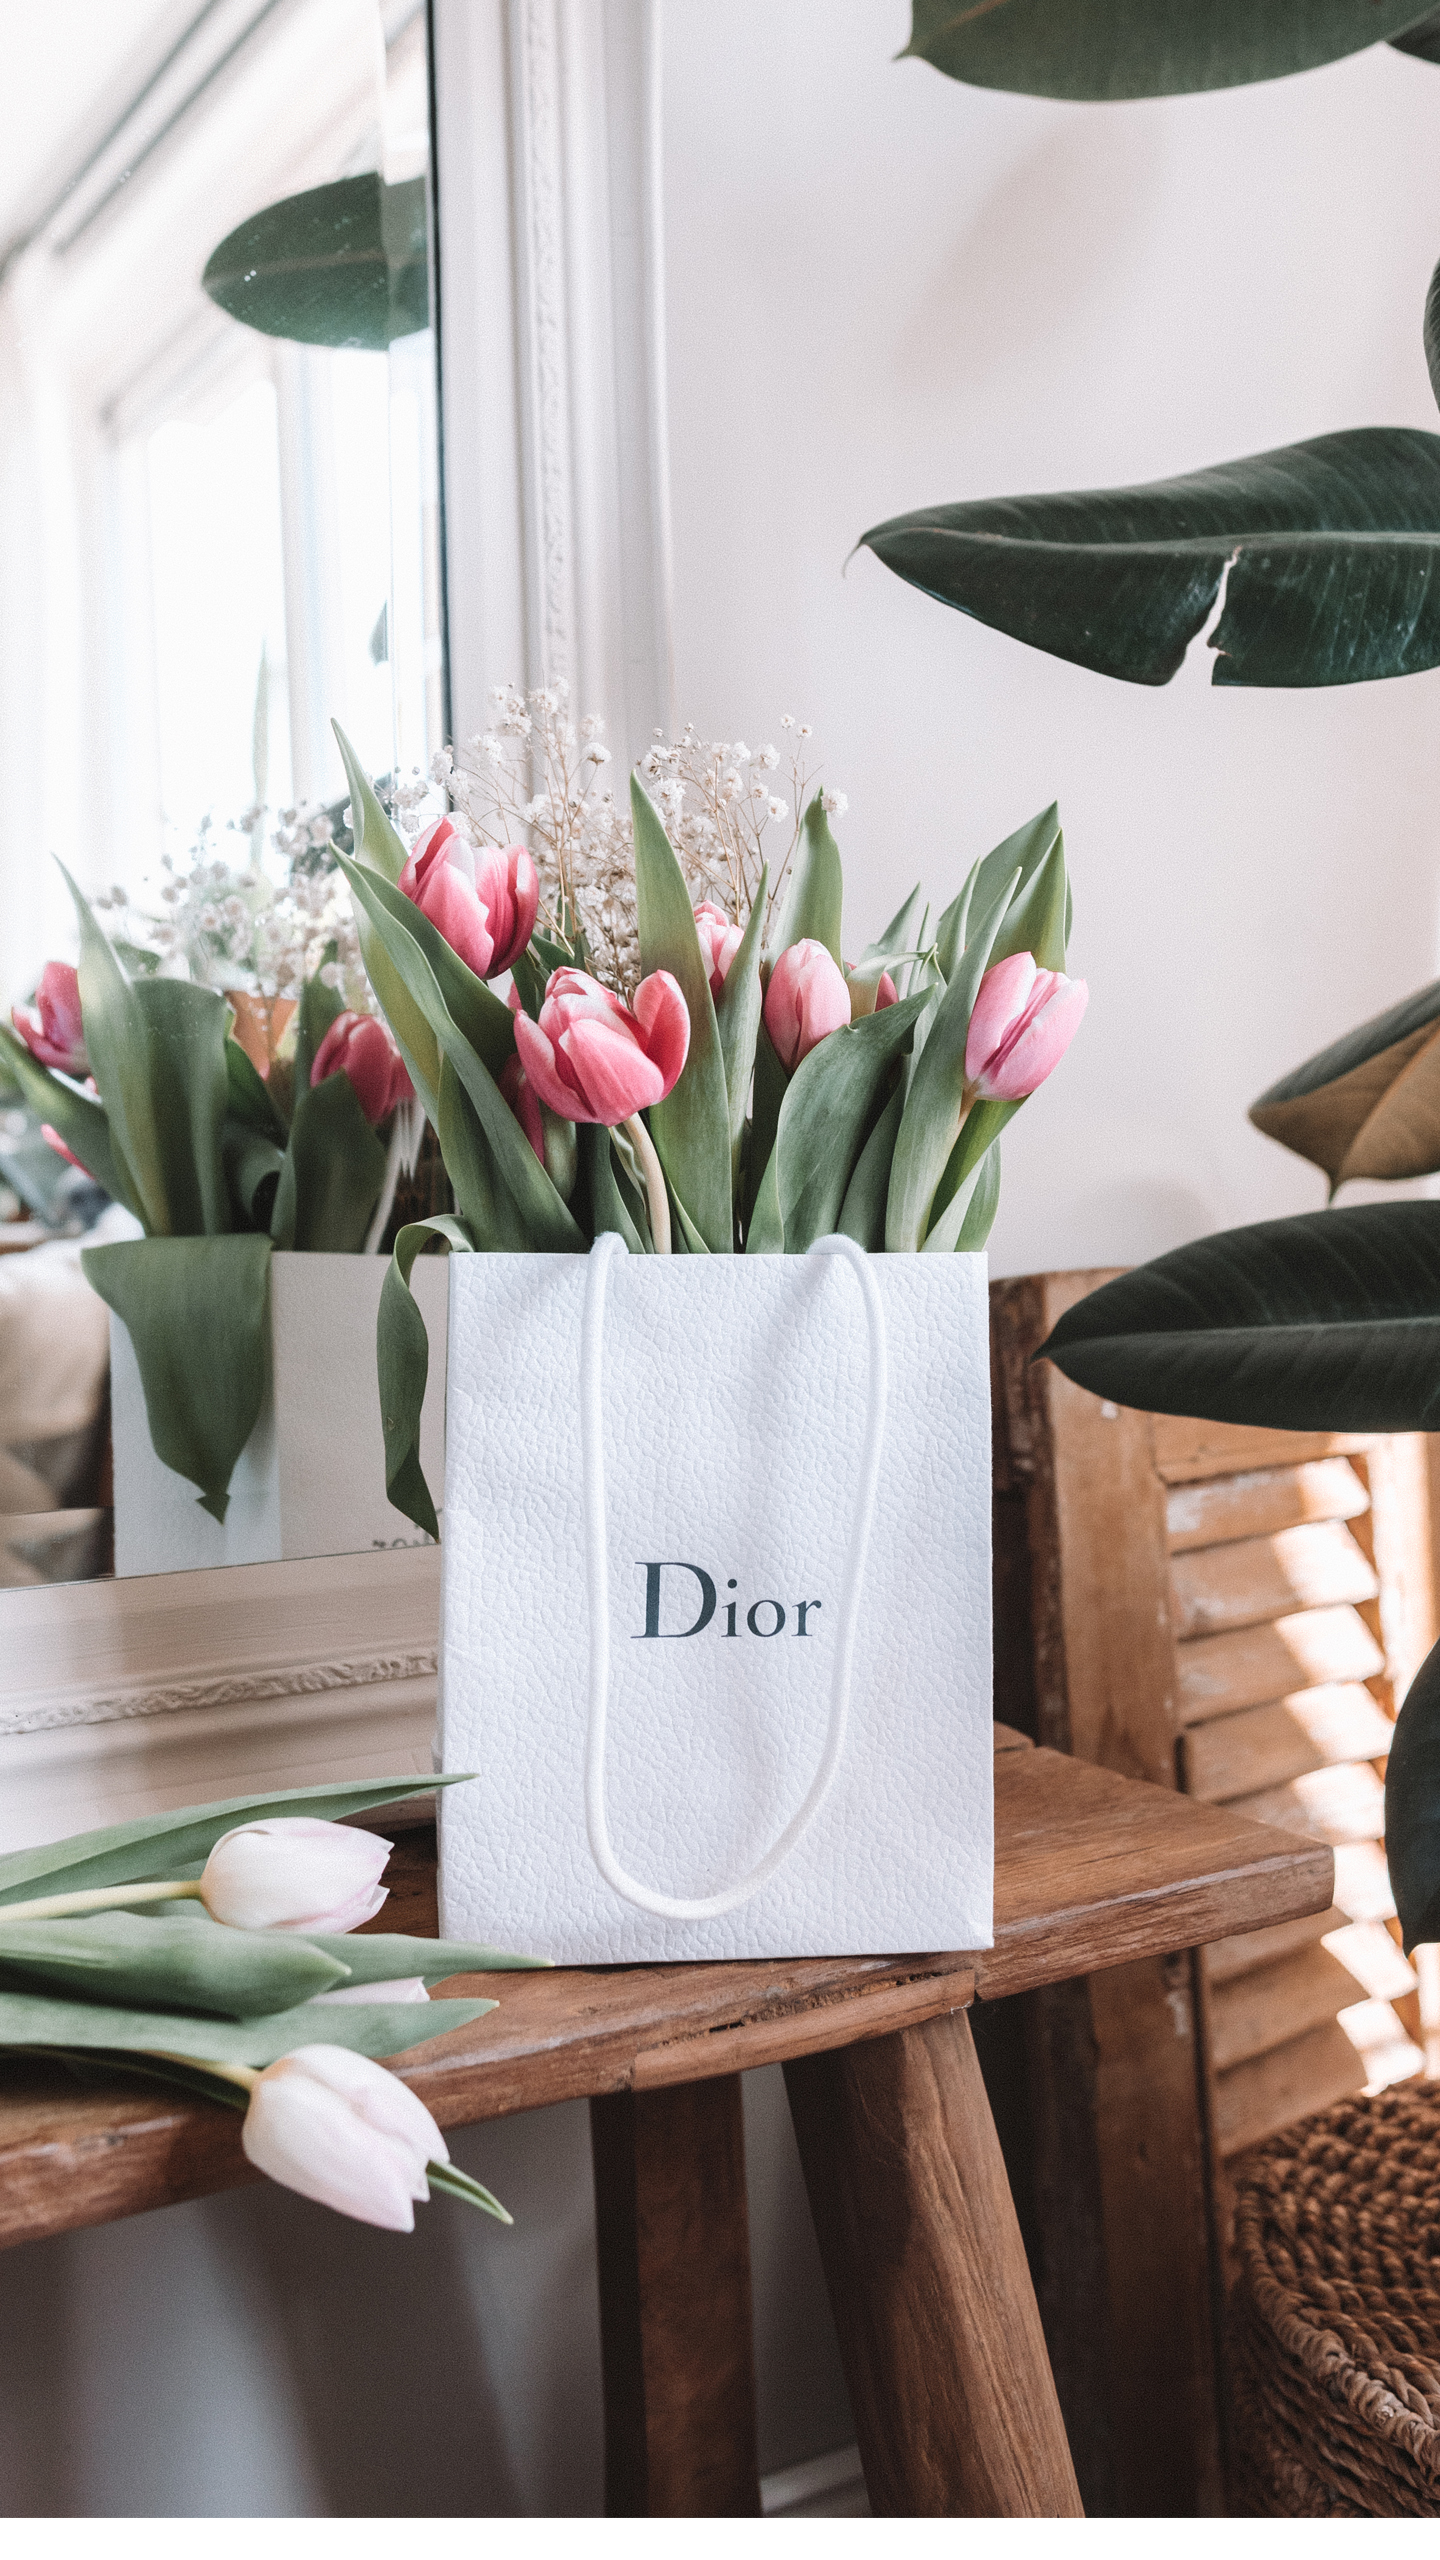 Upcycle Dior tas bag tulpen tulips